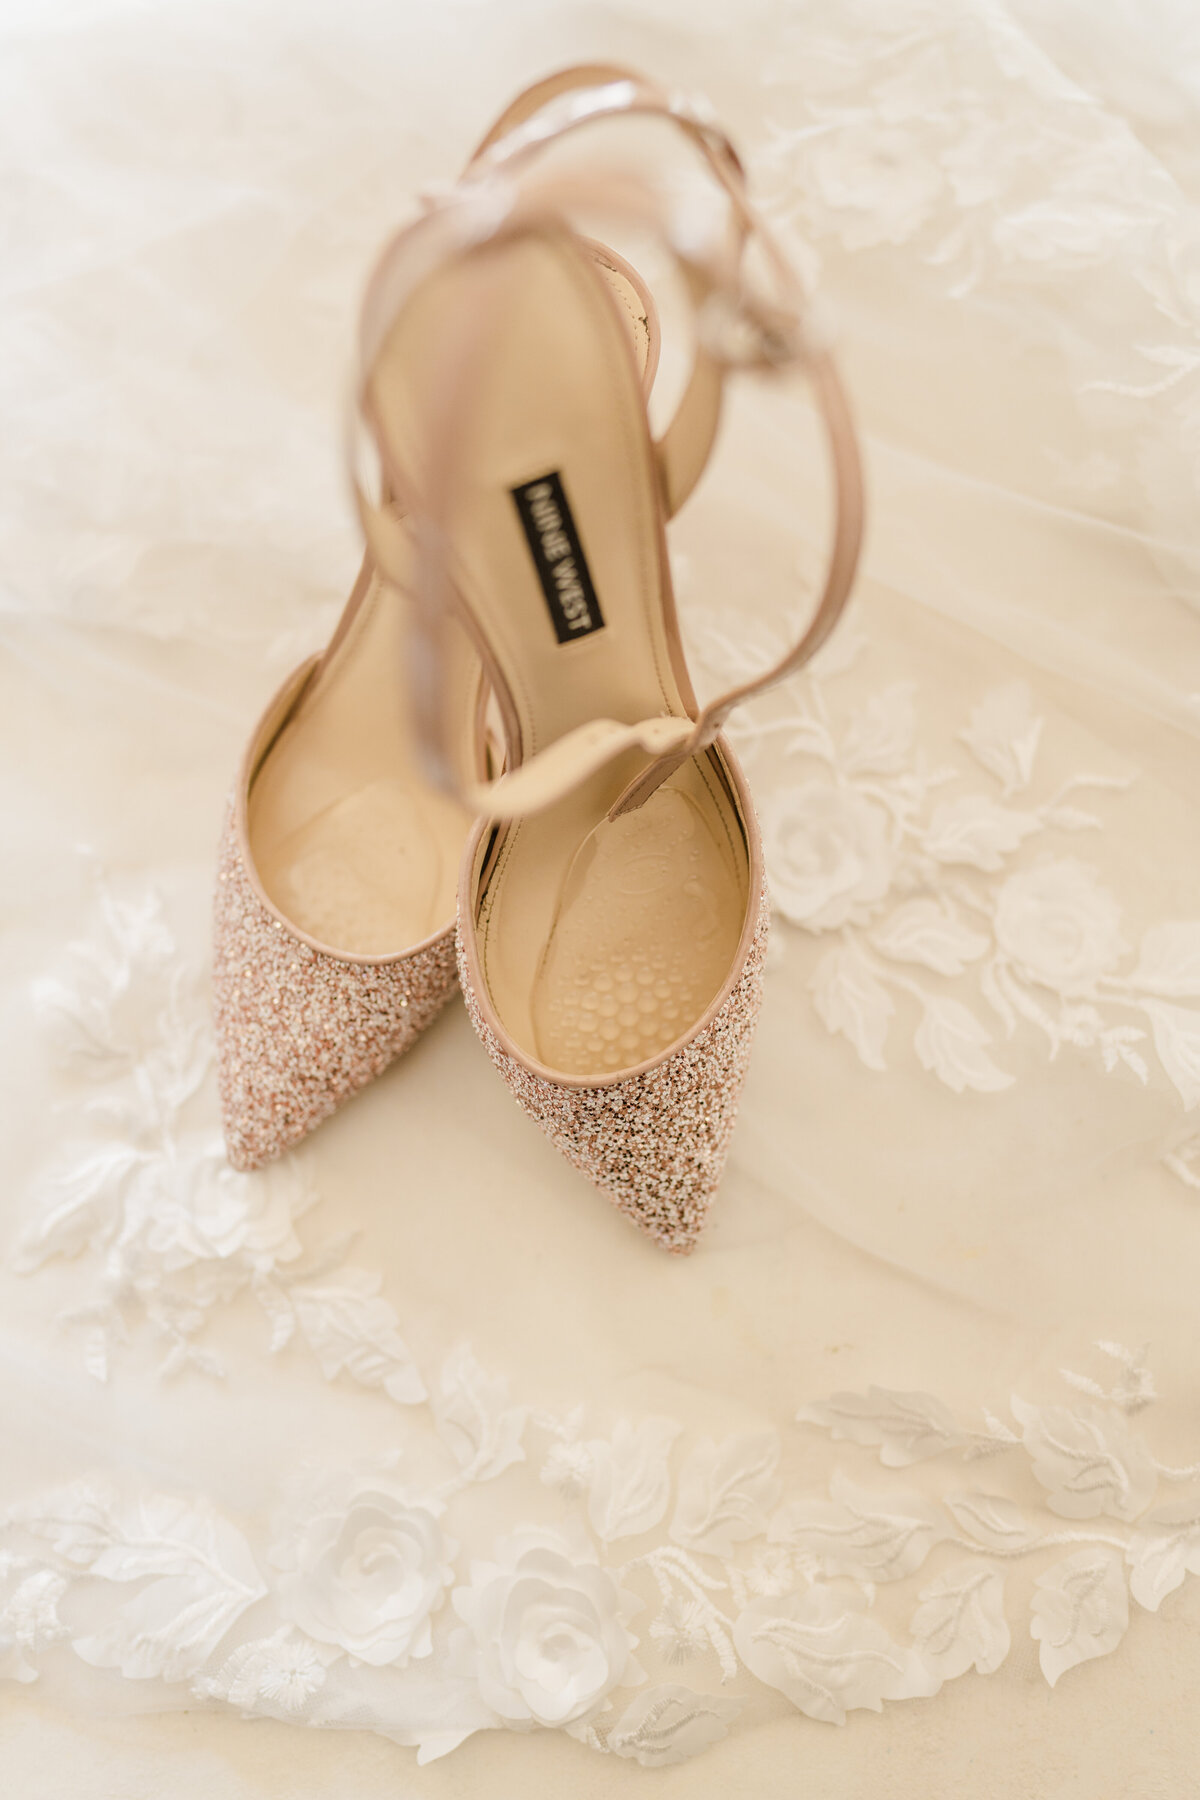 Beautiful rose gold wedding shoes